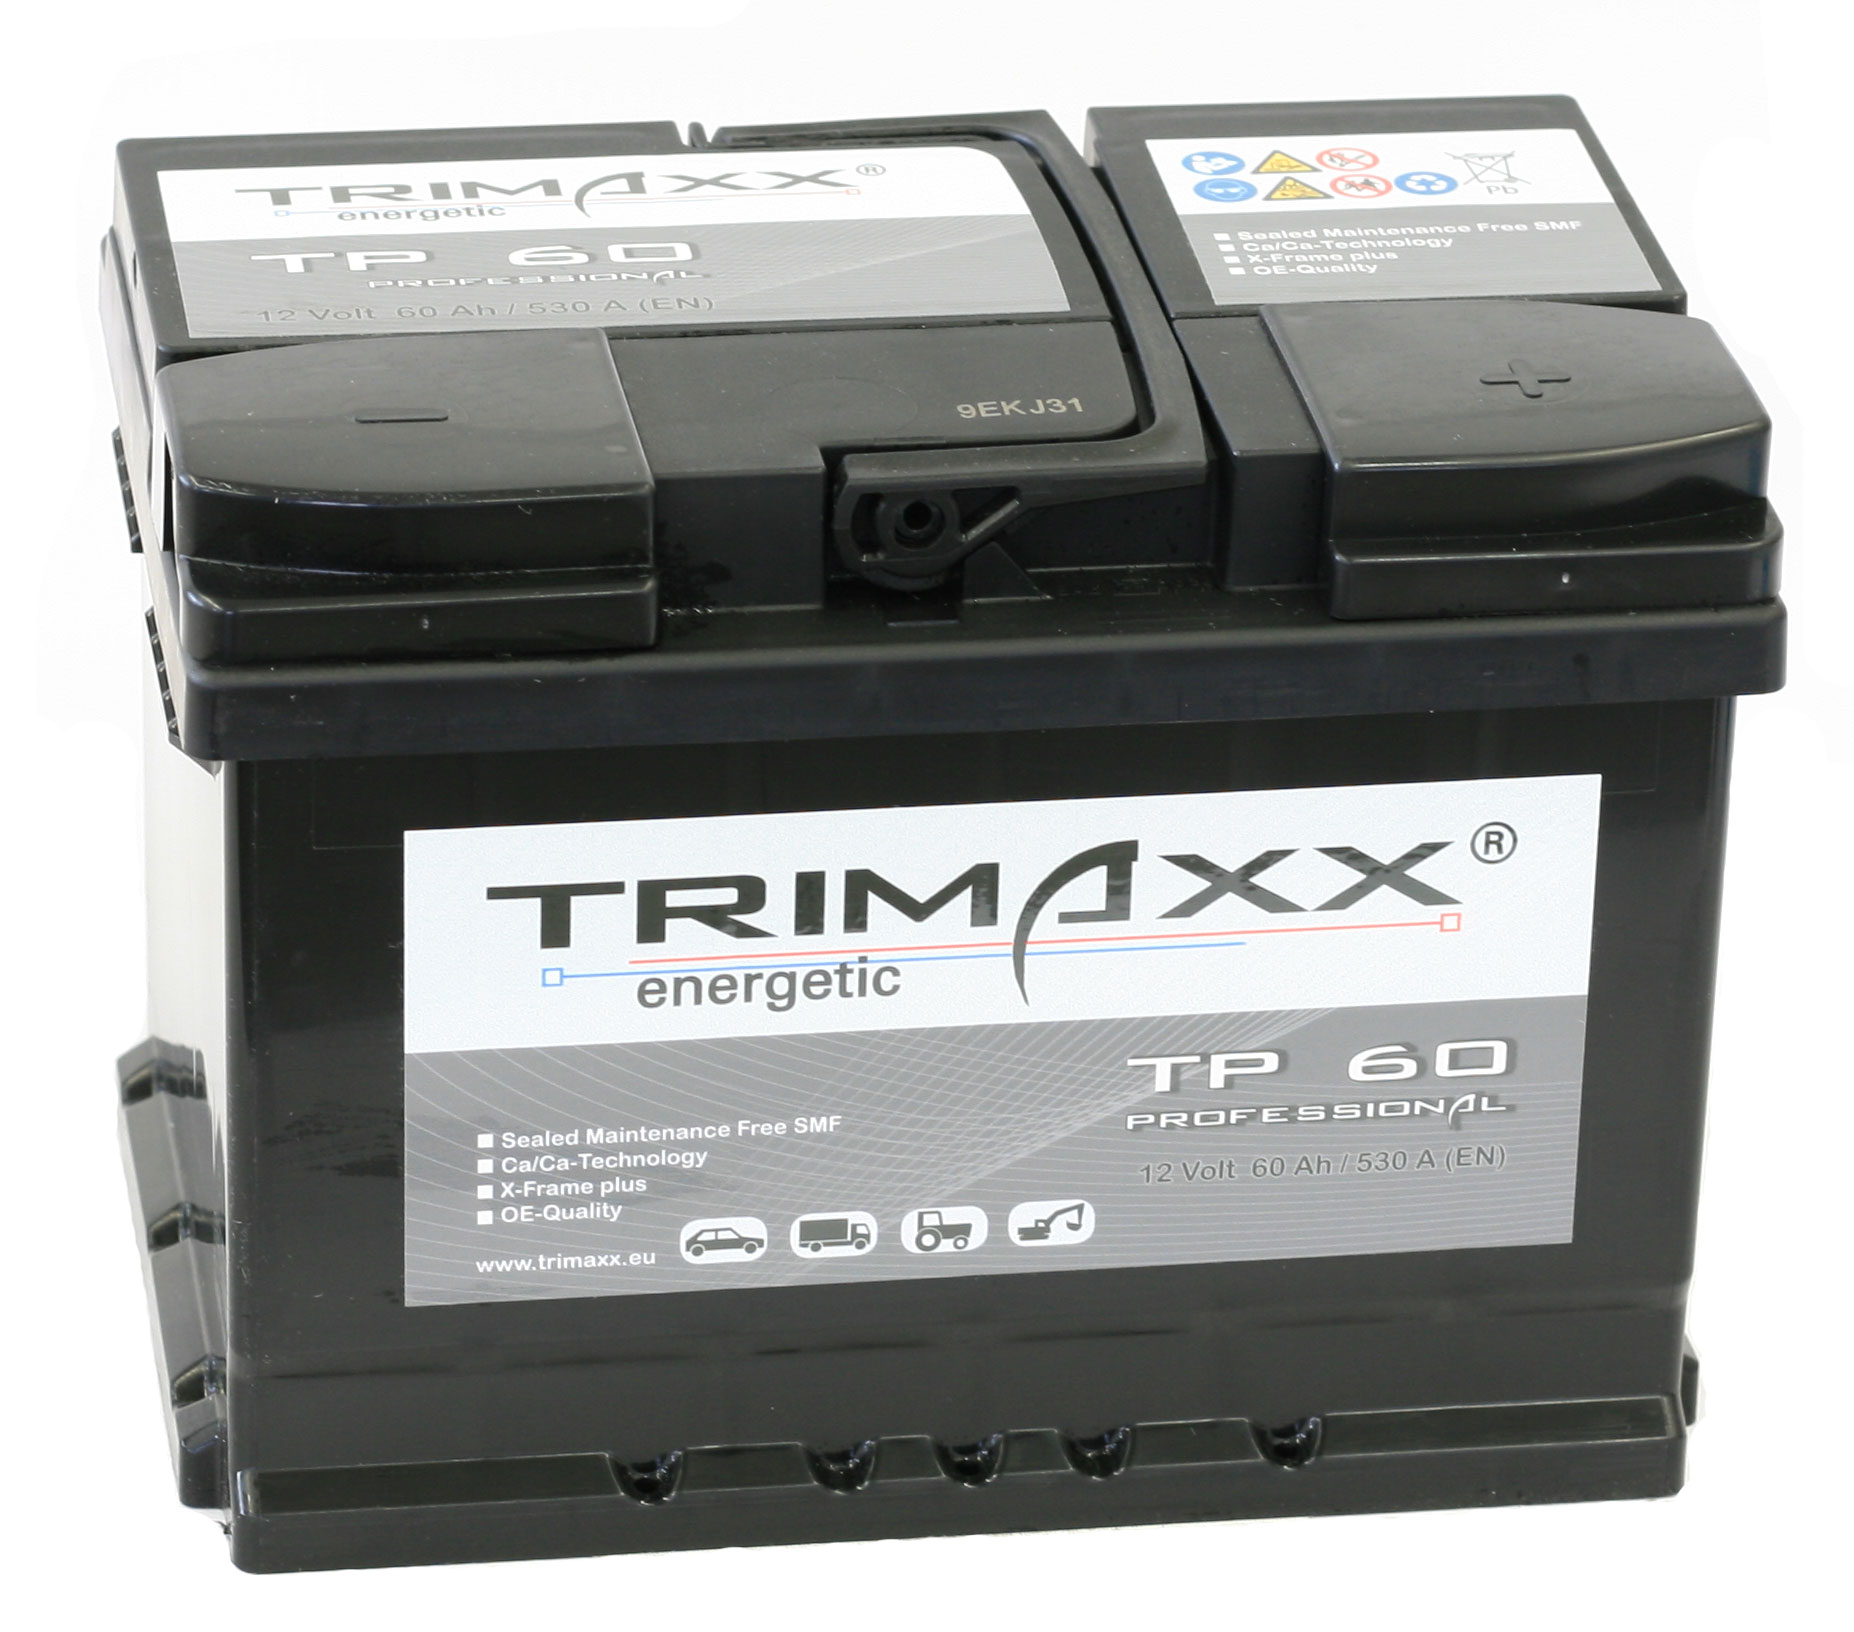 TRIMAXX energetic 12V 60Ah 560A(EN) - 1a Batterien GmbH